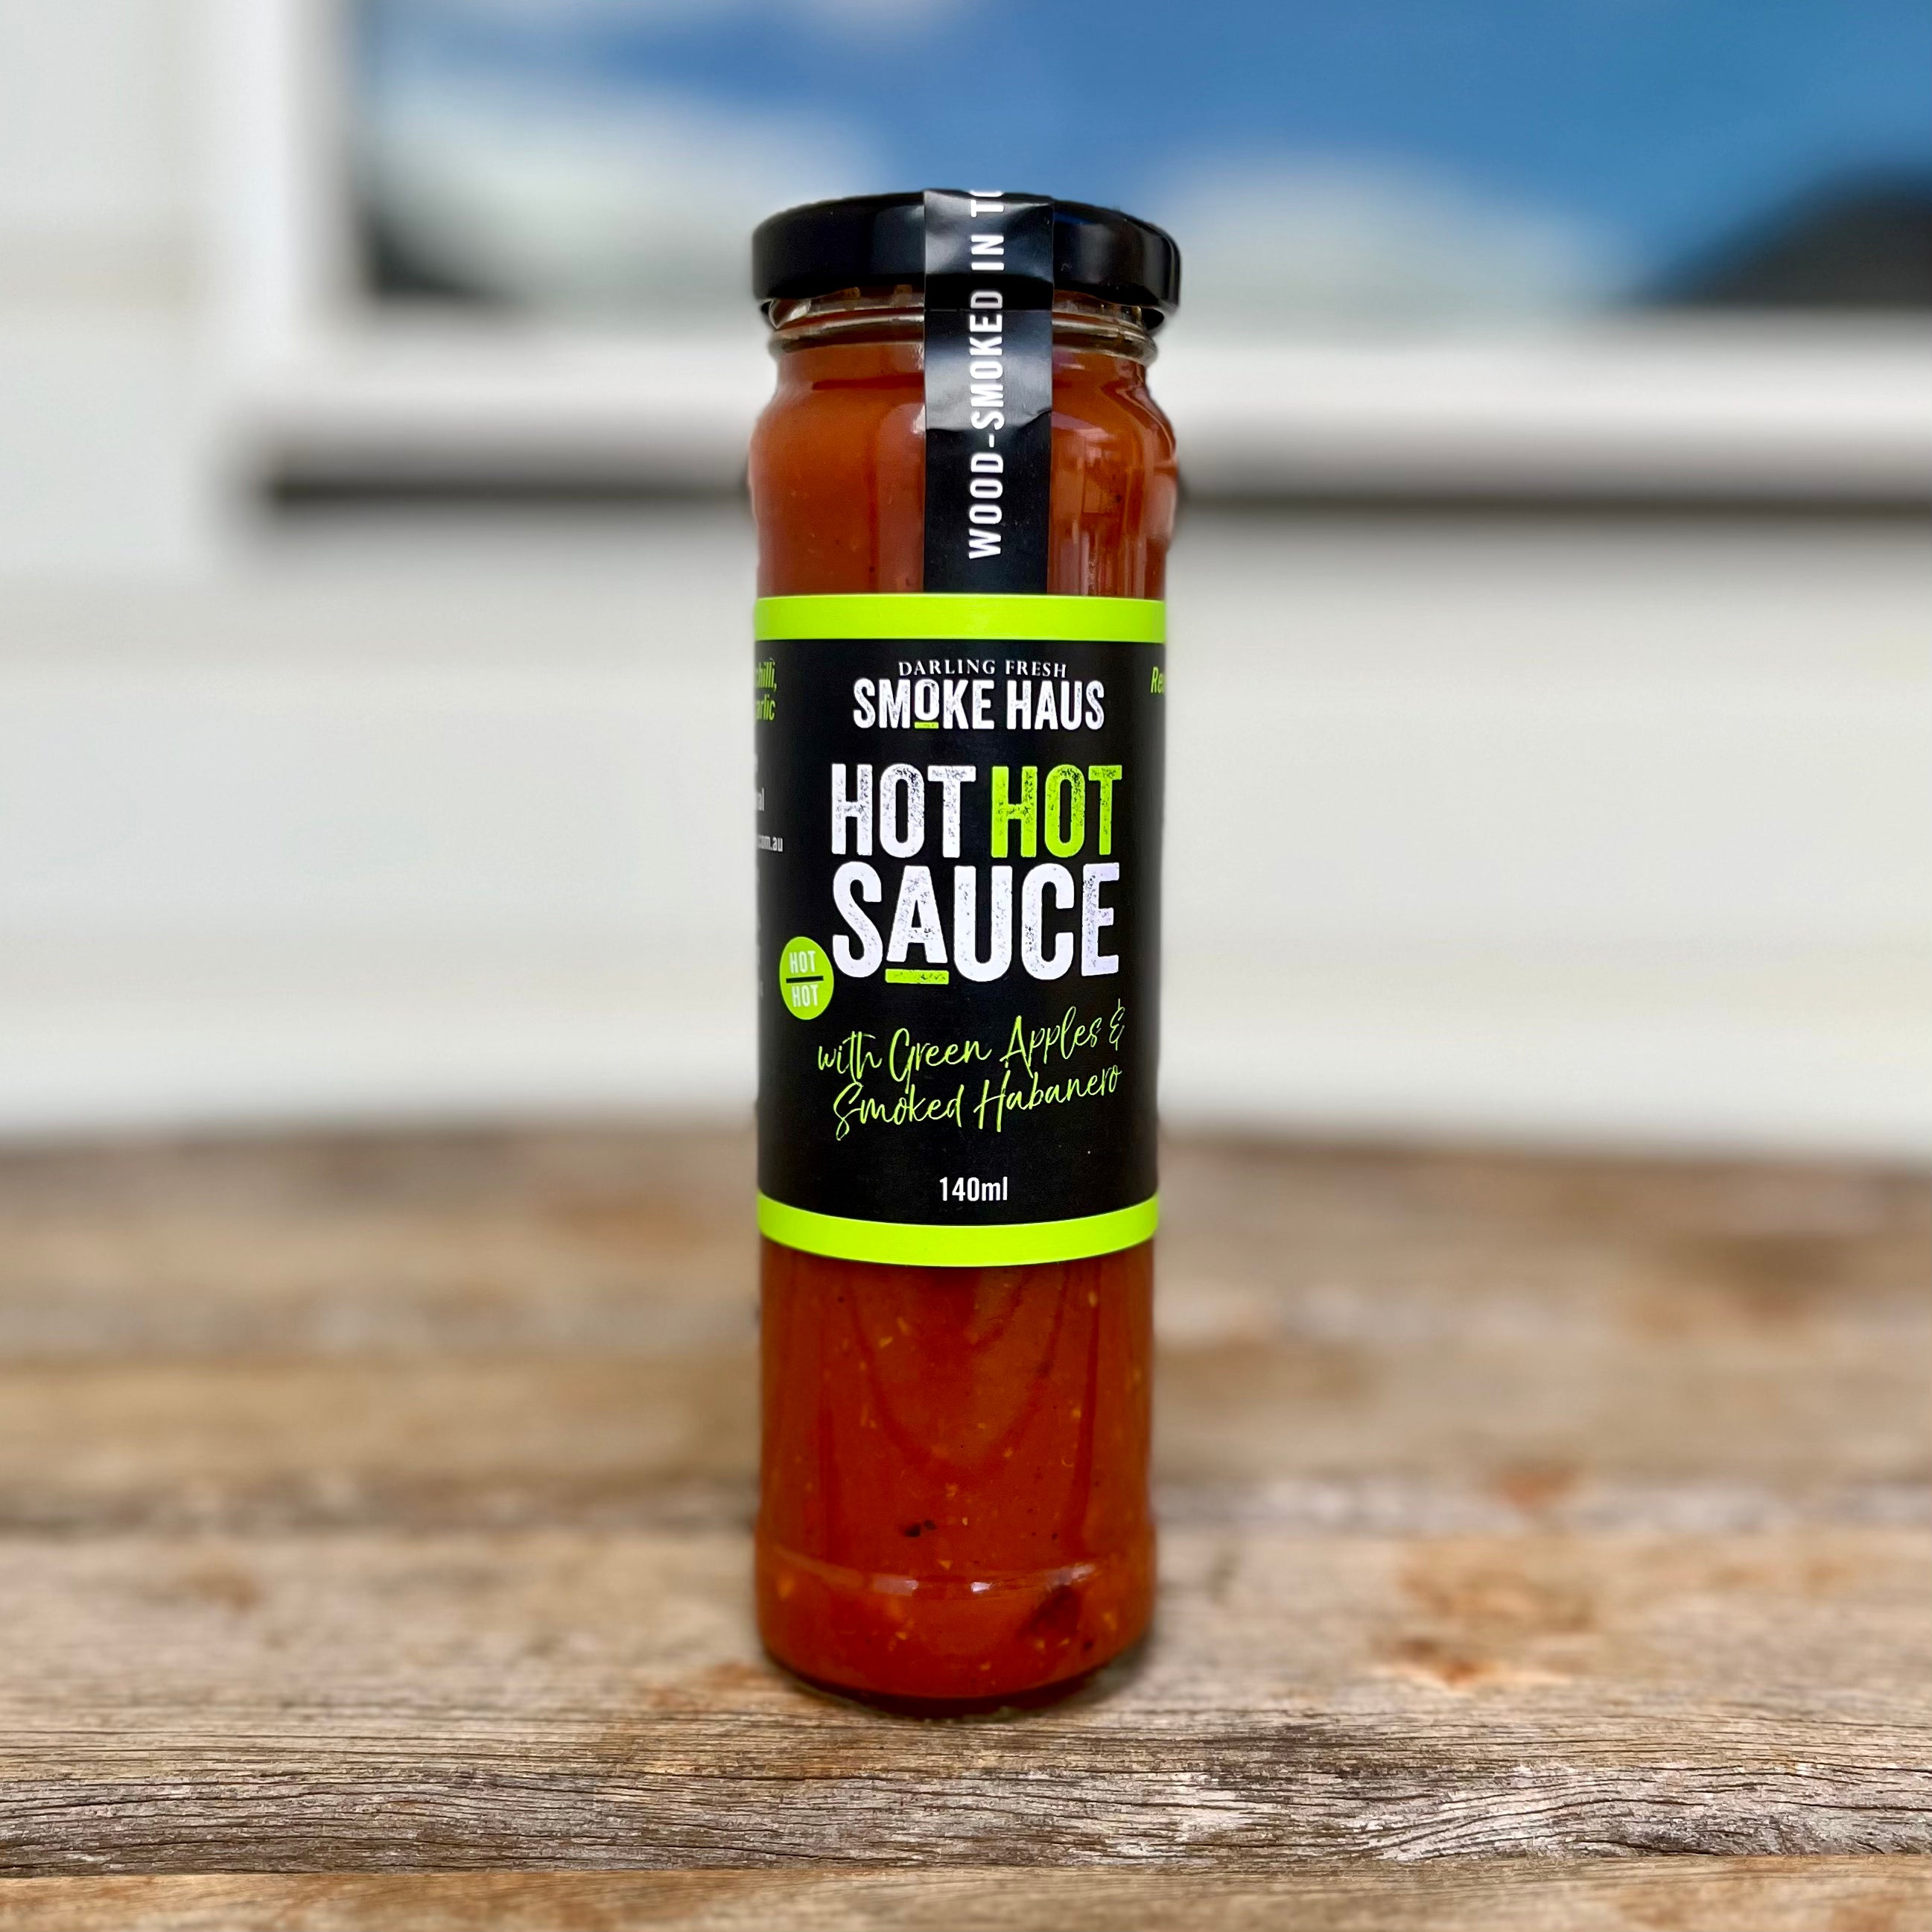 DF Smoke Haus - Hot HOT Sauce with Green Apple & Smoked Habanero - 140ml